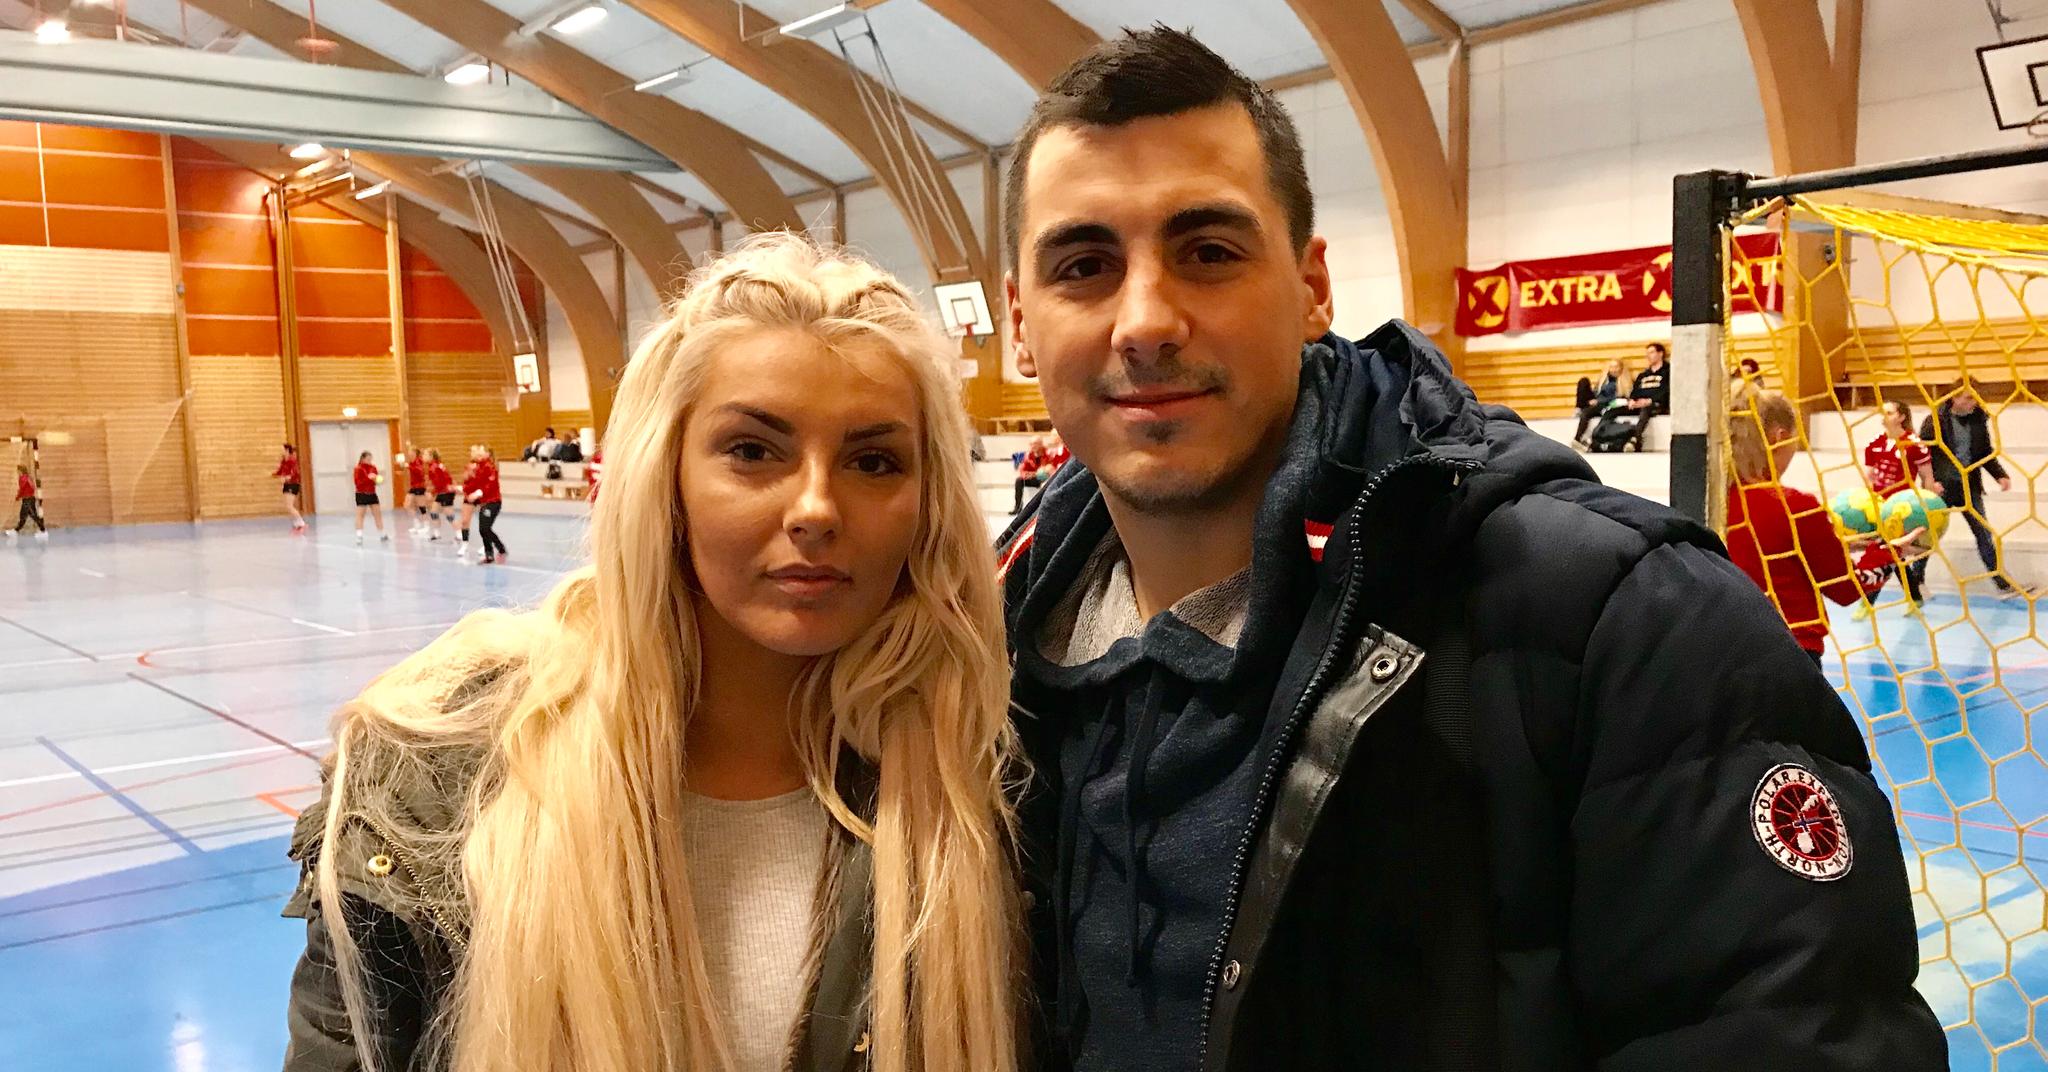 Domagoj Ferencina og kjæresten Petra Lena Kovac stortrives i Tromsø. 